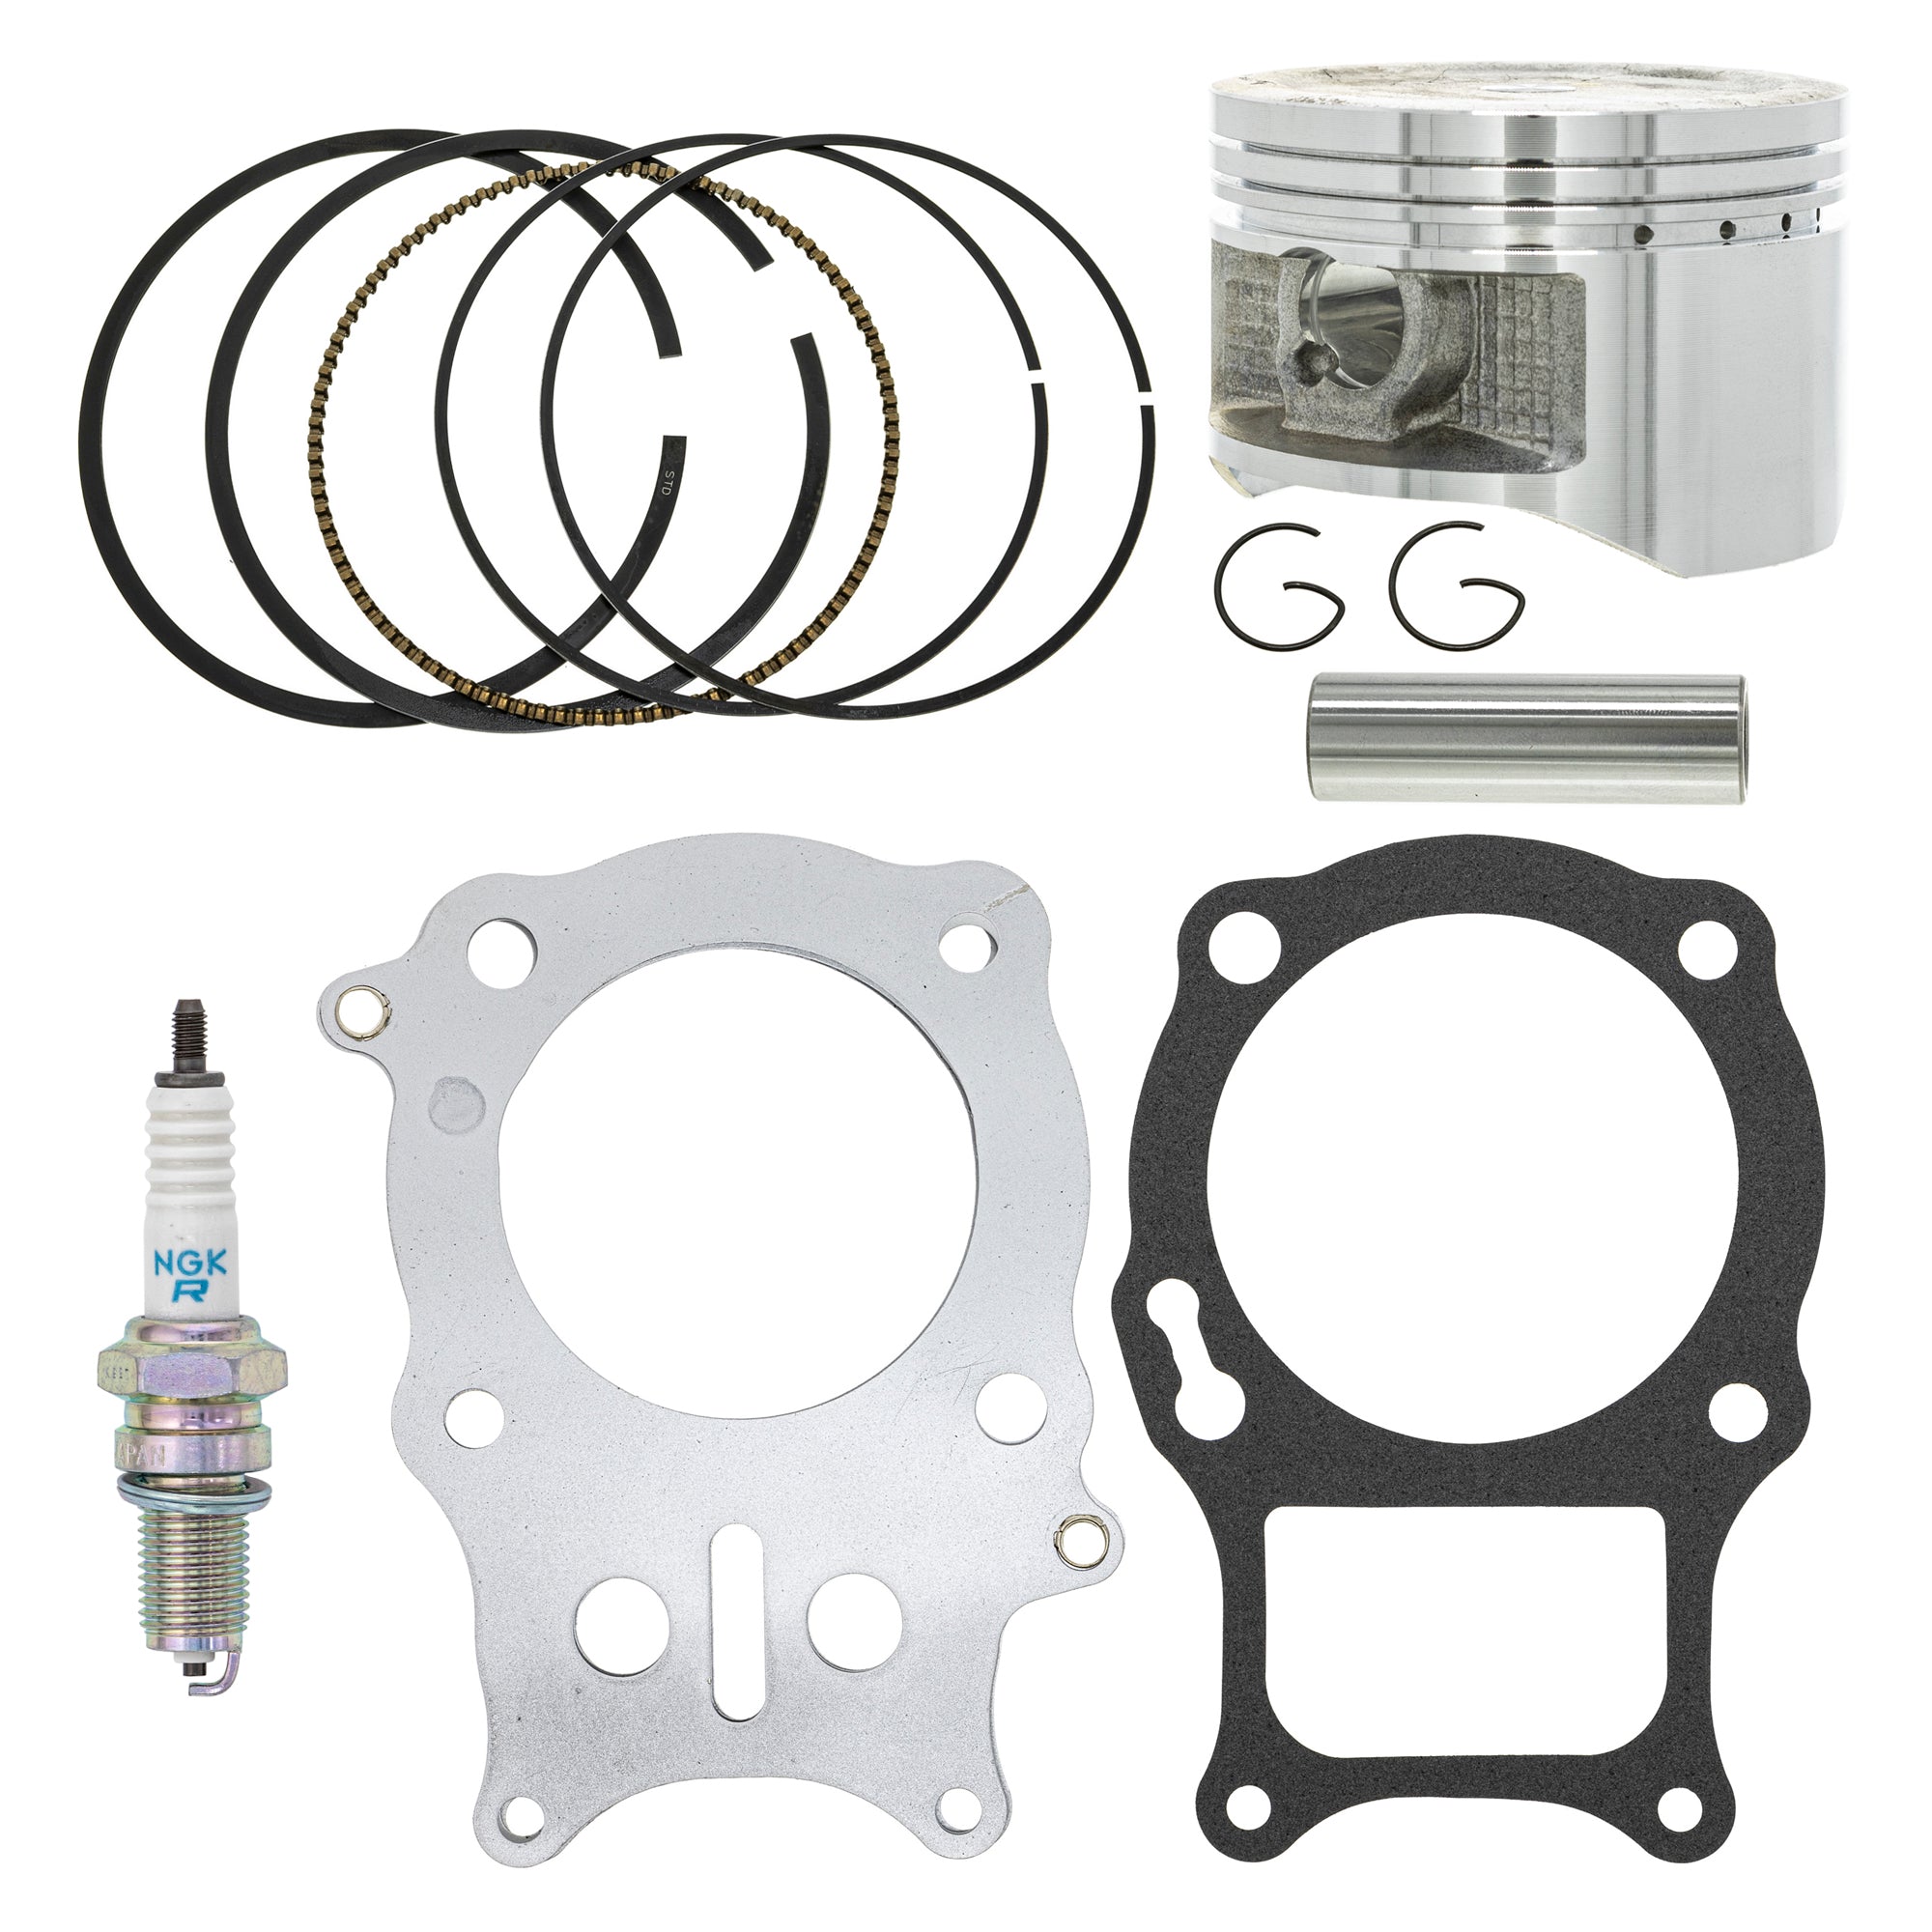 Piston Gasket Kit for zOTHER Honda TRX250 SporTrax Recon 94601-15000 90551-883-000 NICHE MK1003424